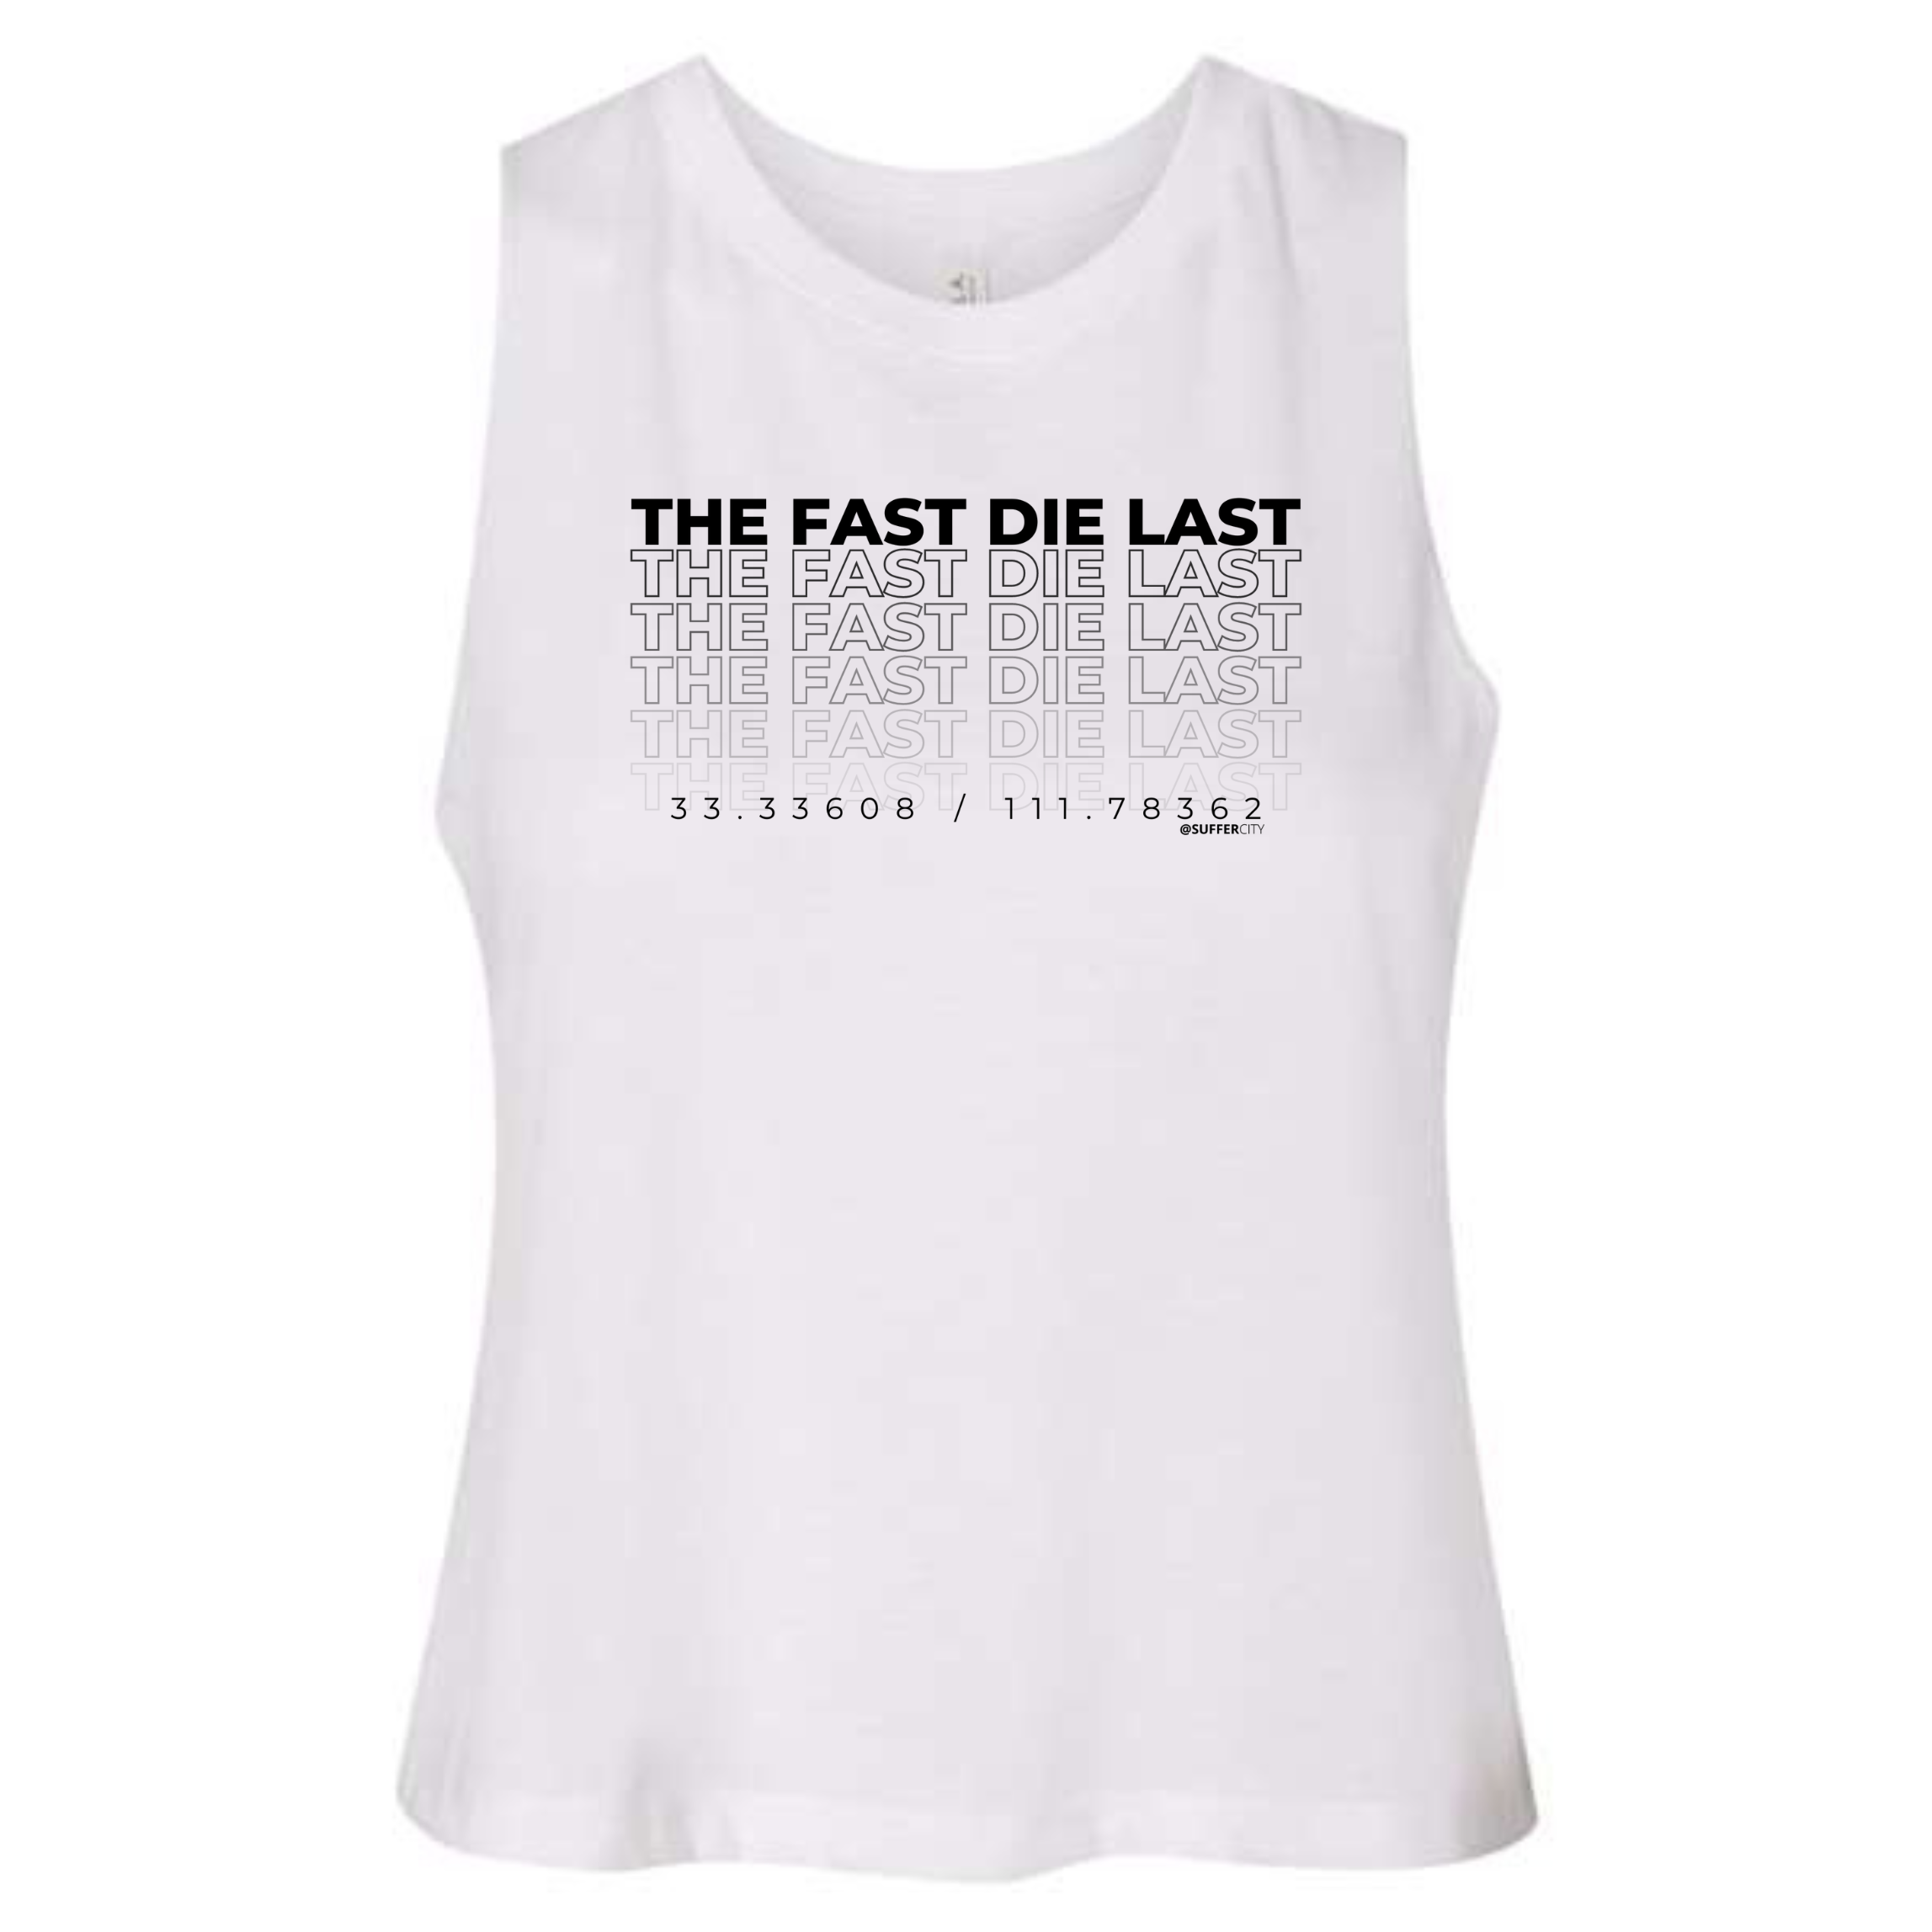 The Fast Die Last “Cooler" Options